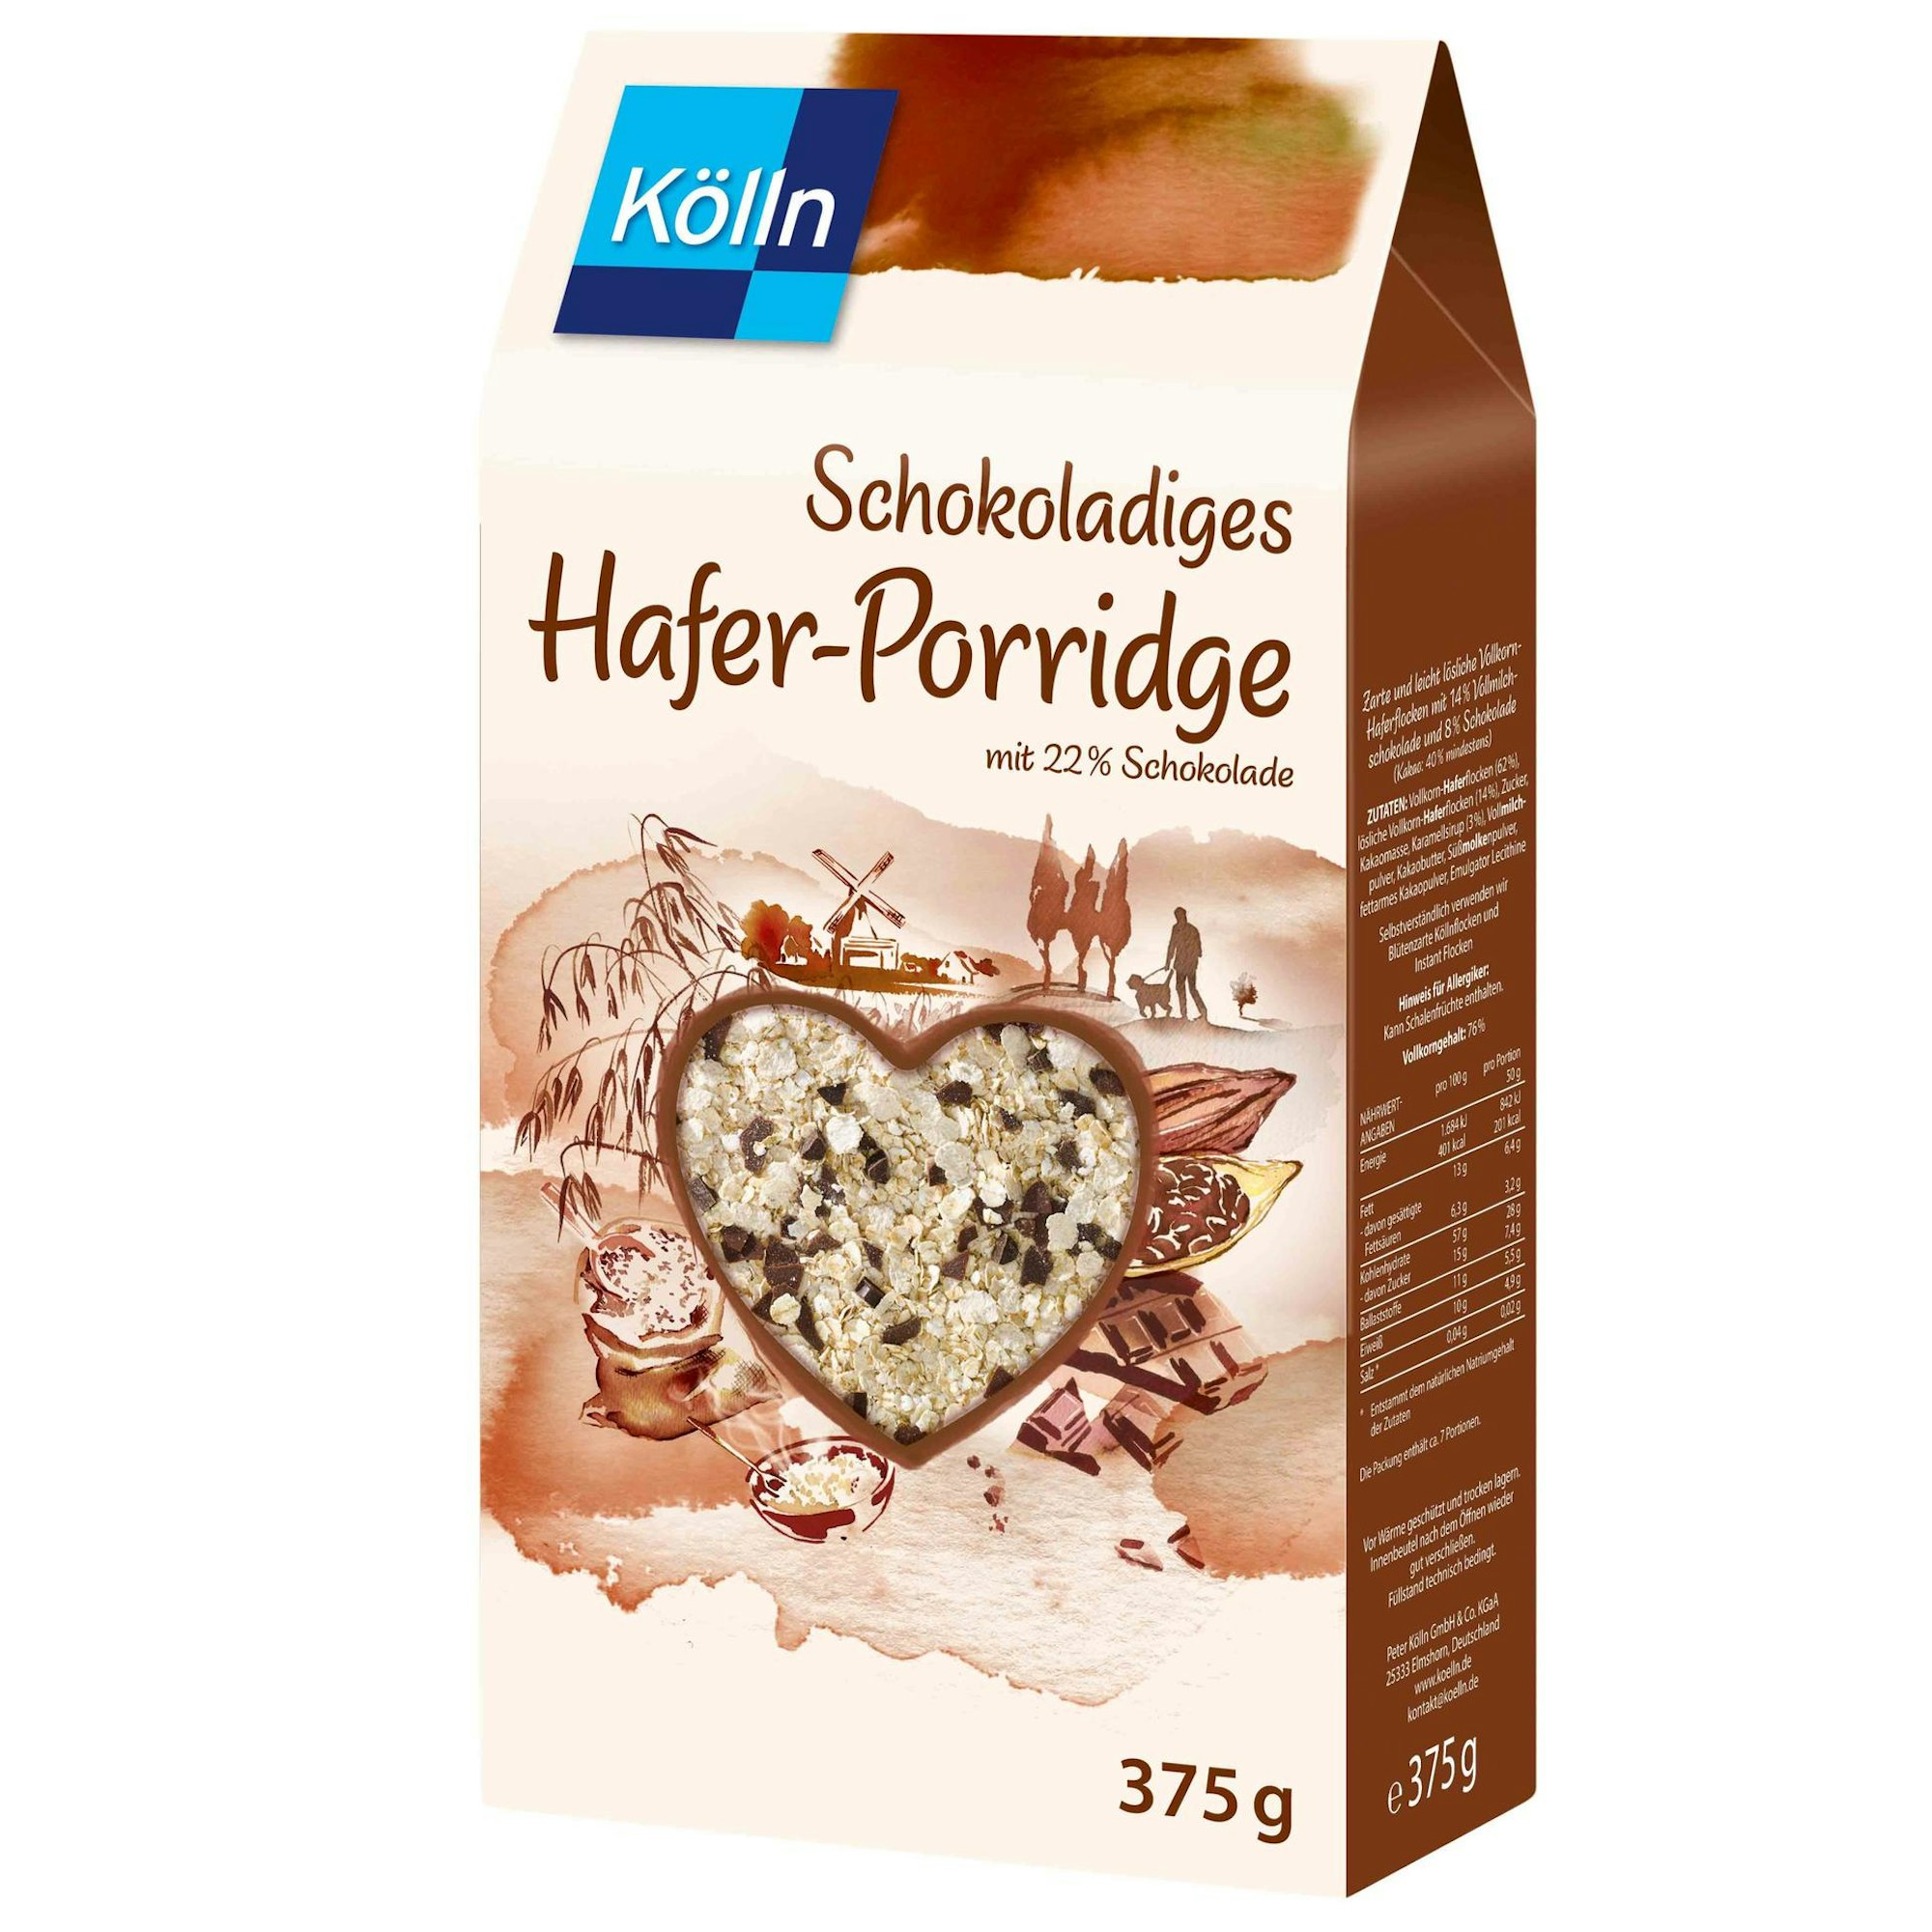 k-lln-schokoladiges-hafer-porridge-375g